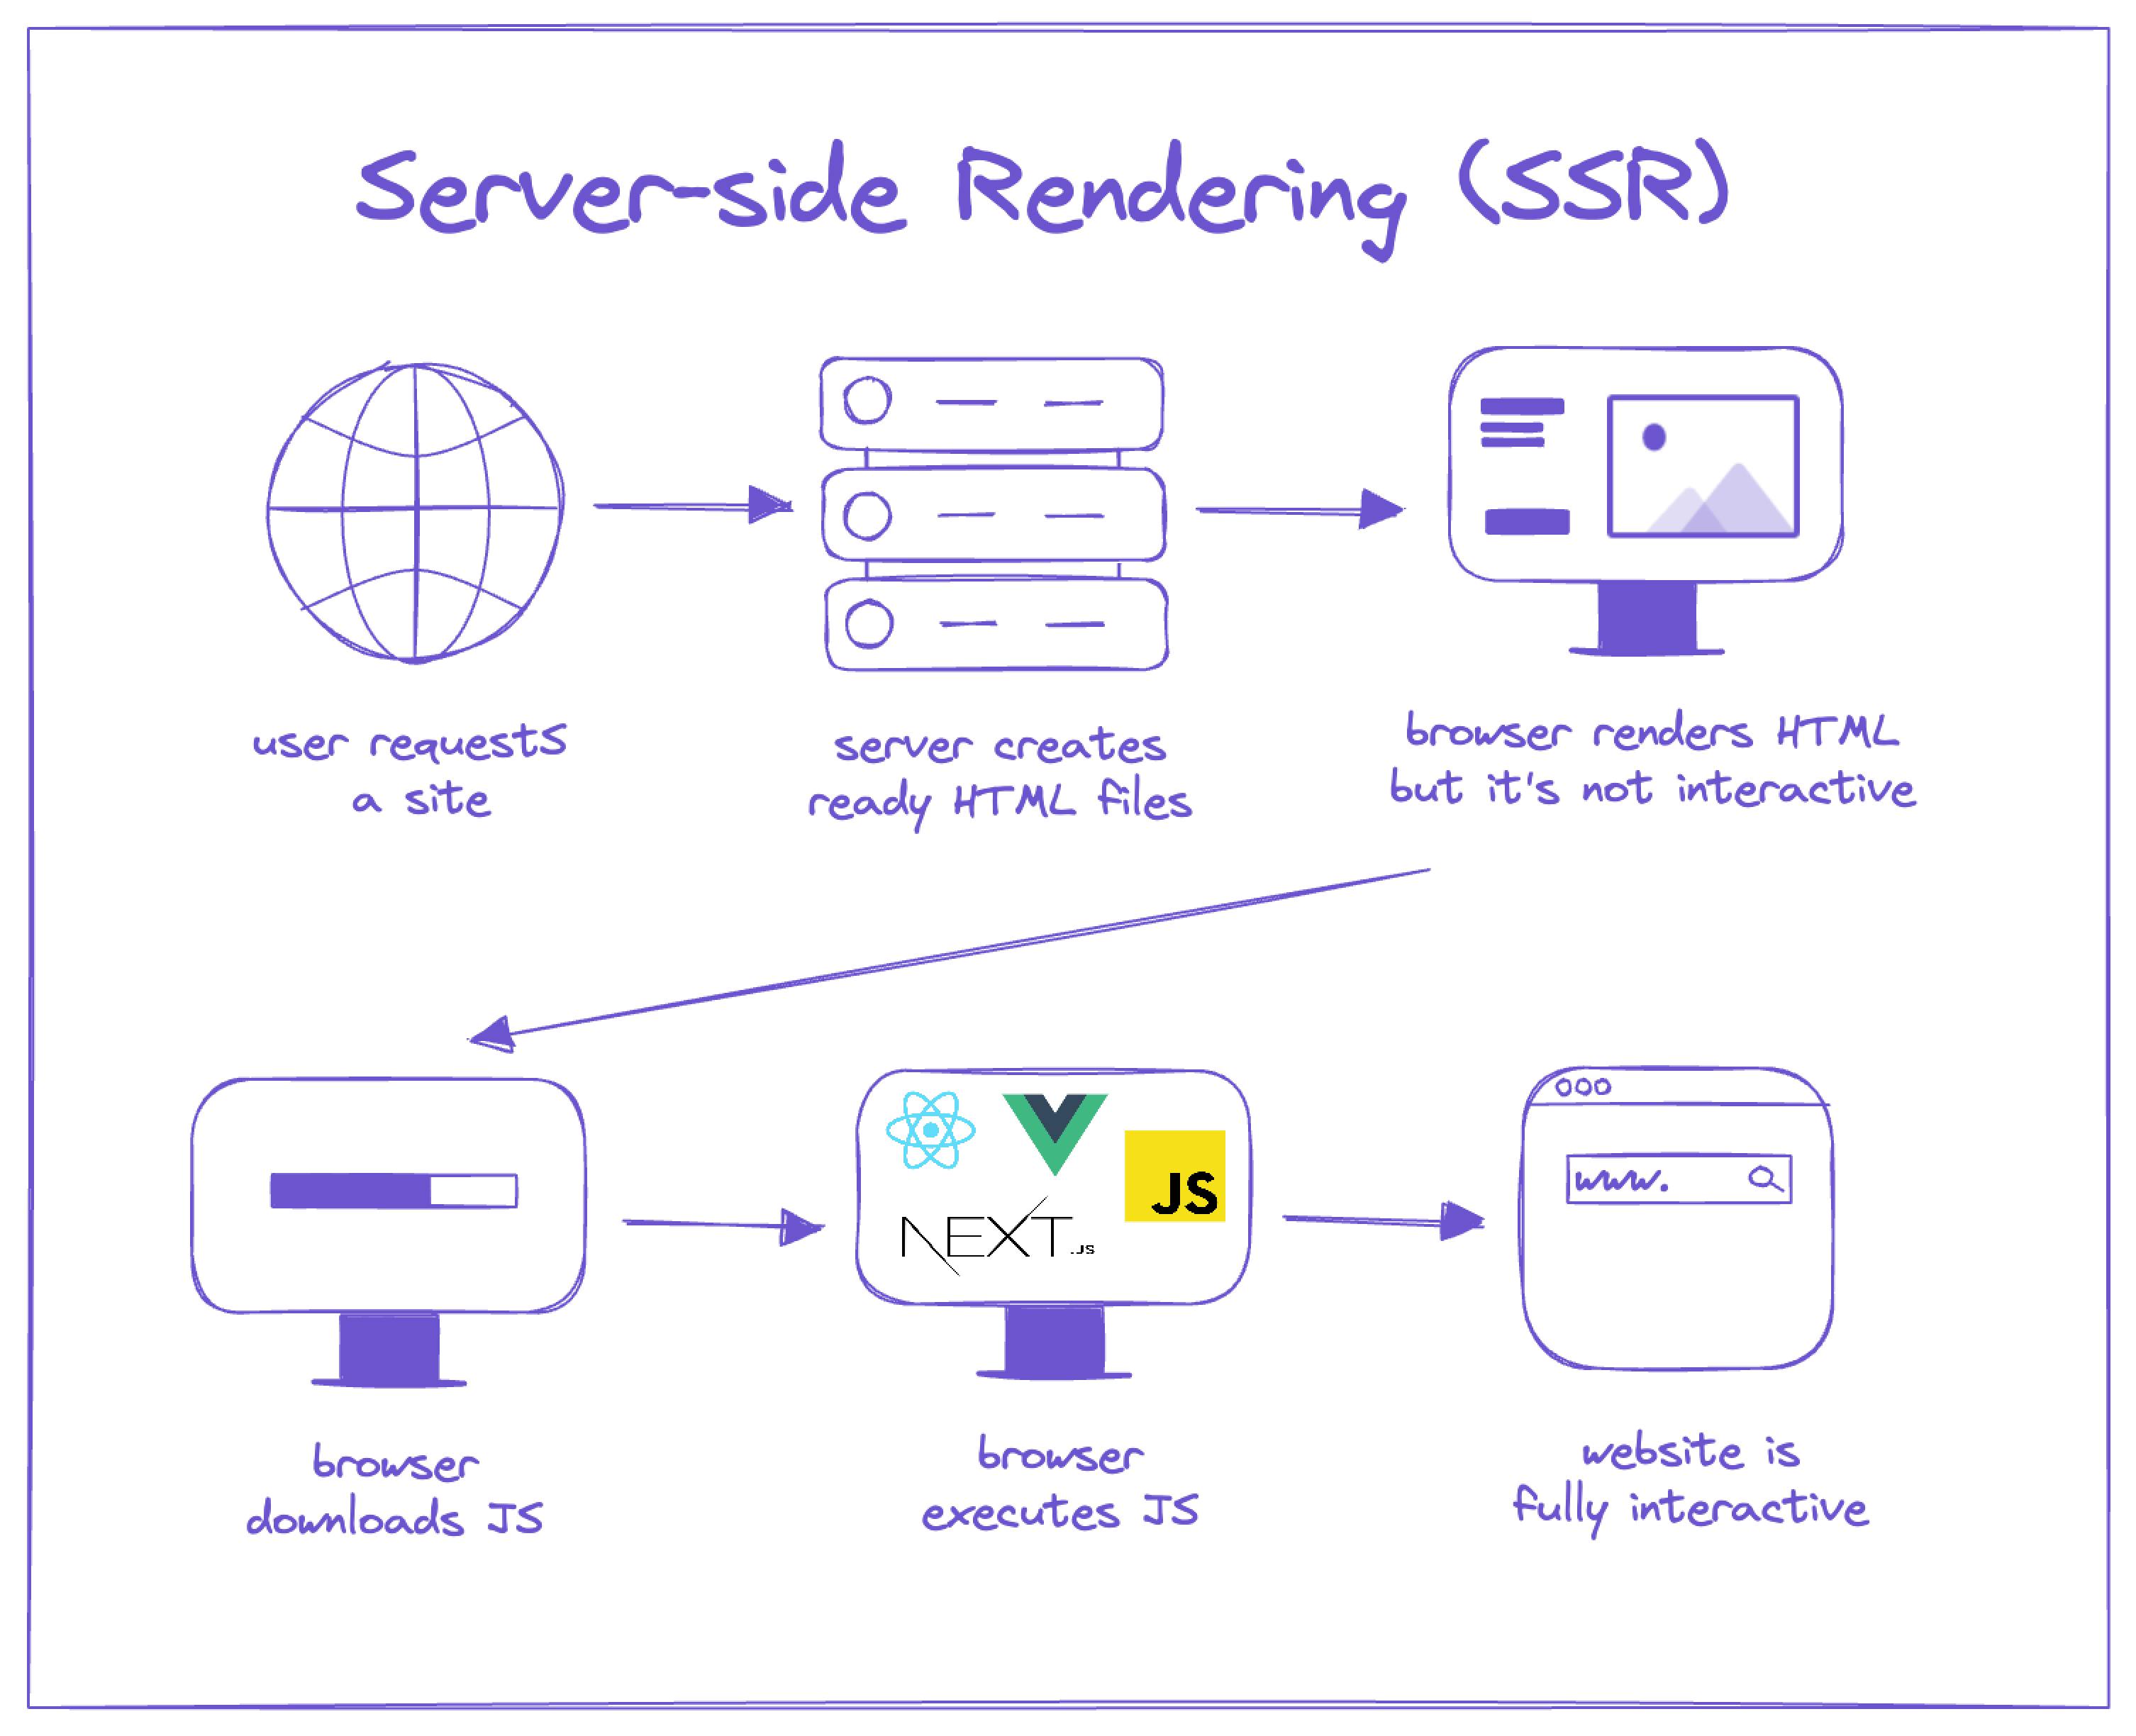 An image of Server-side rendering.